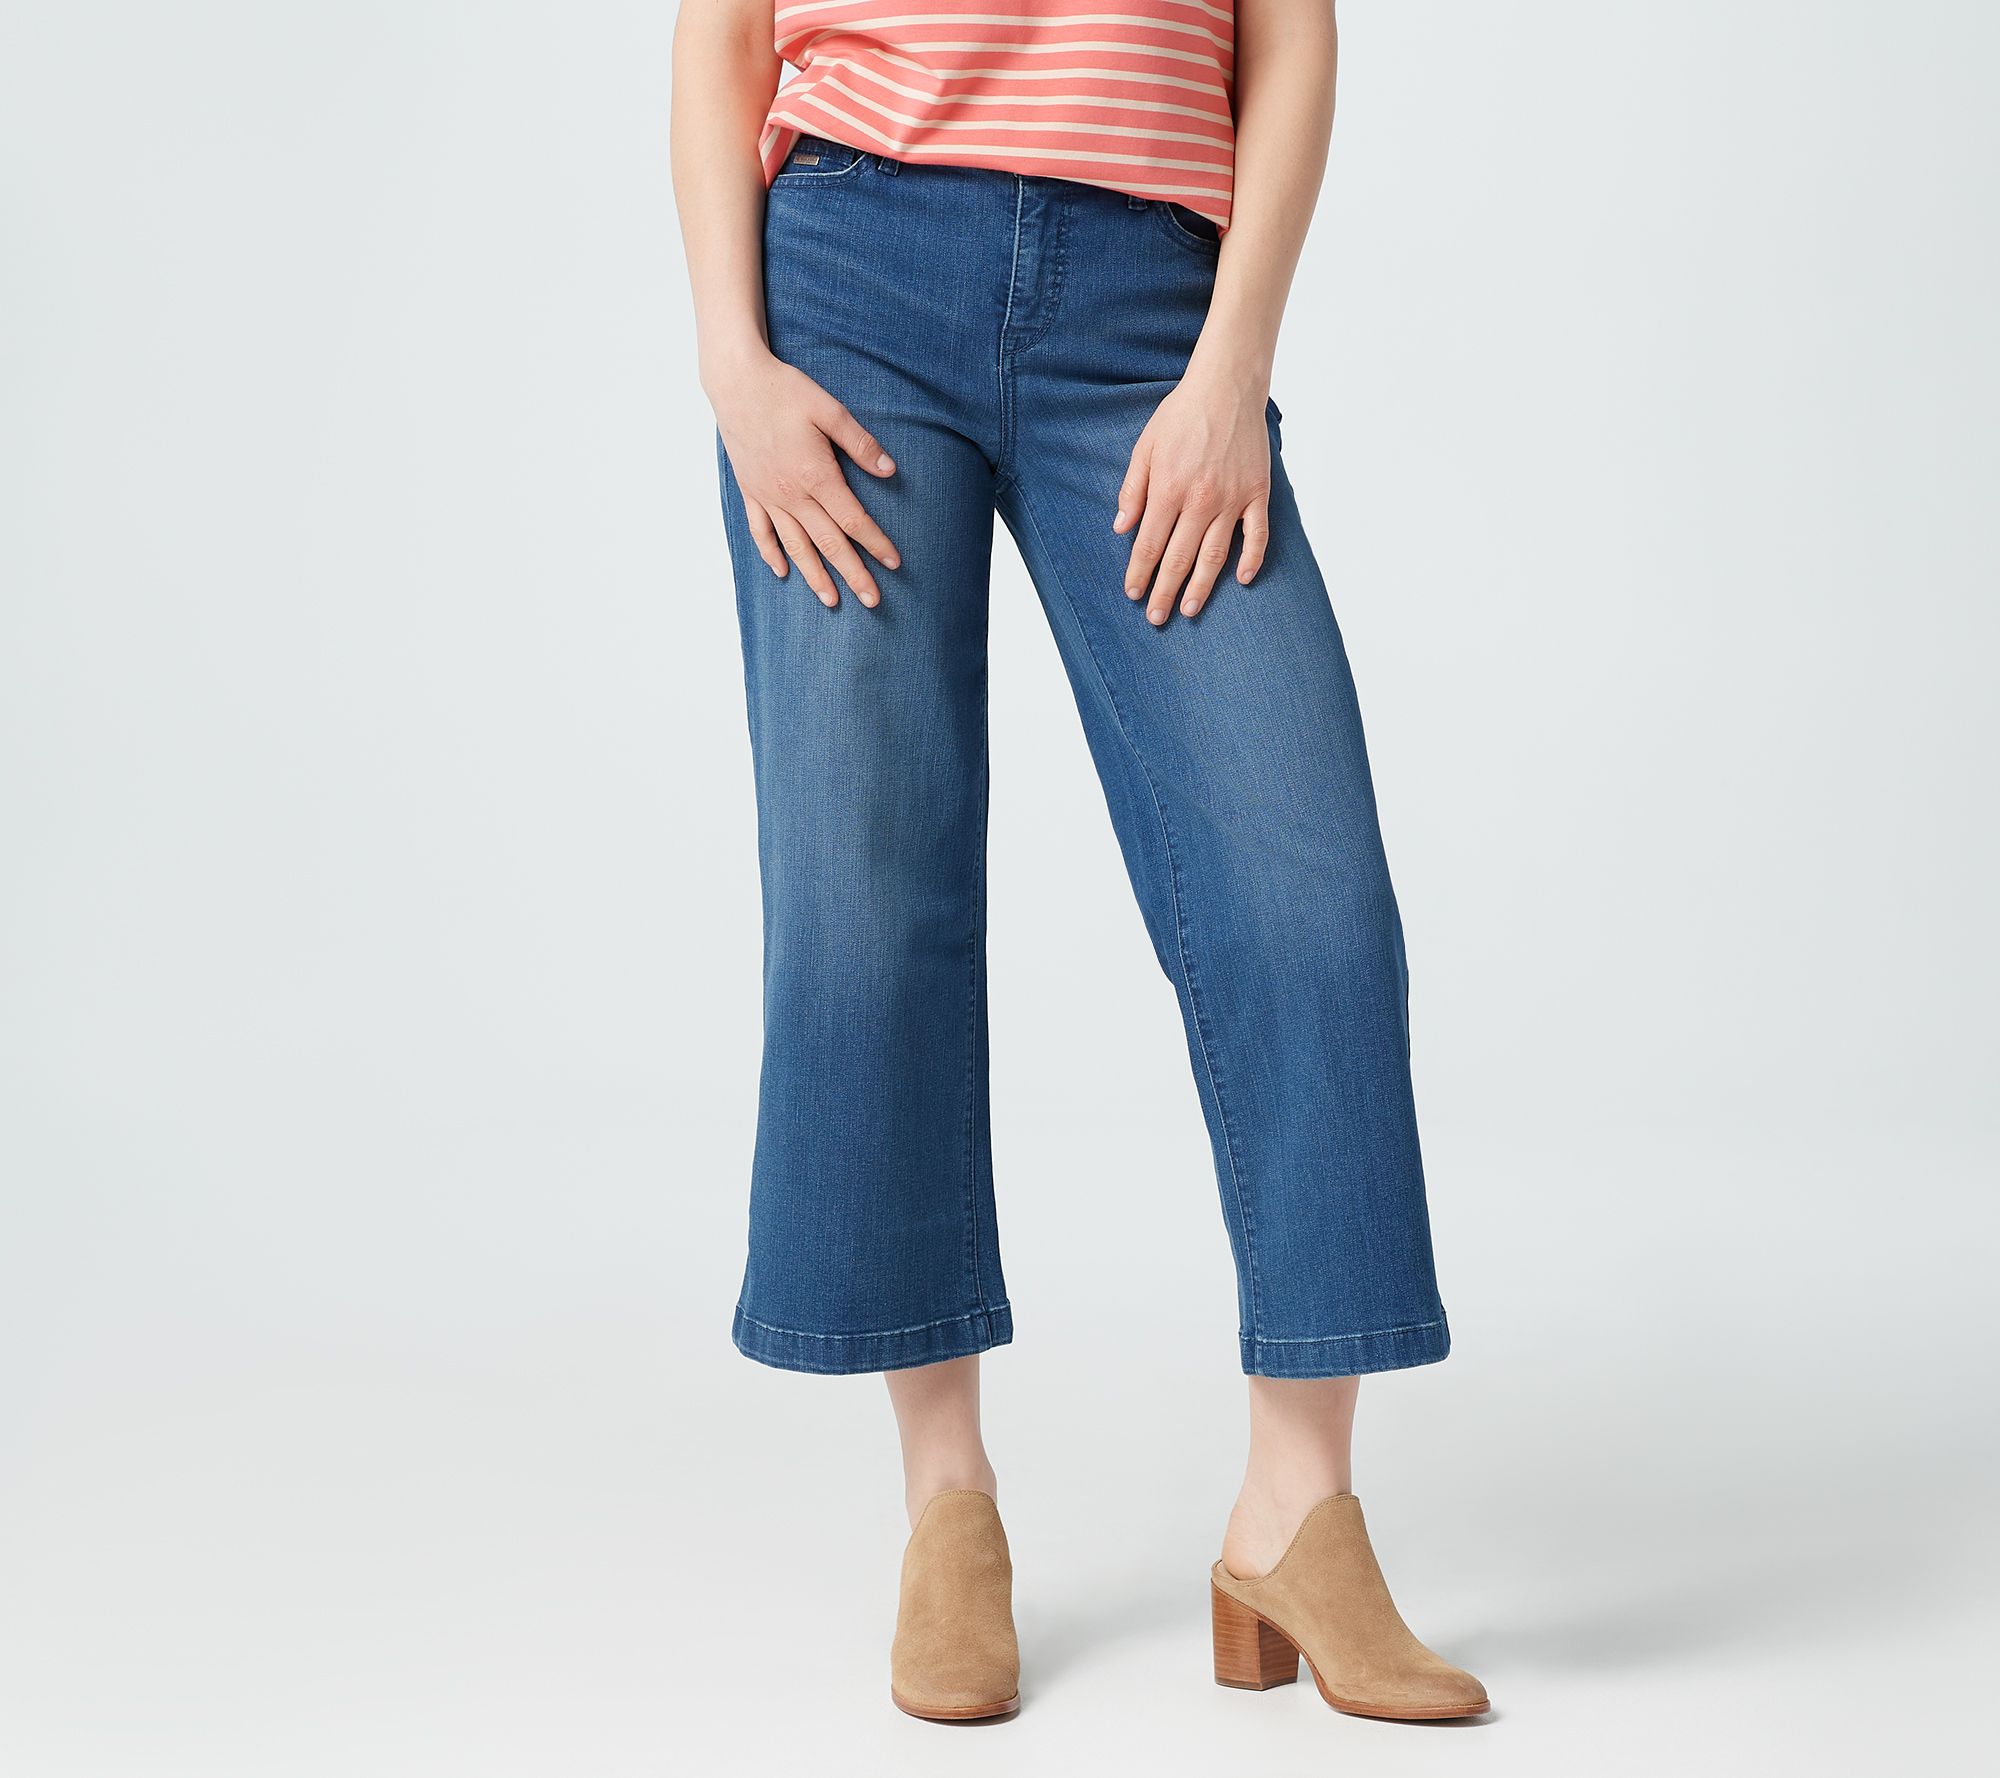 wide regular jeans